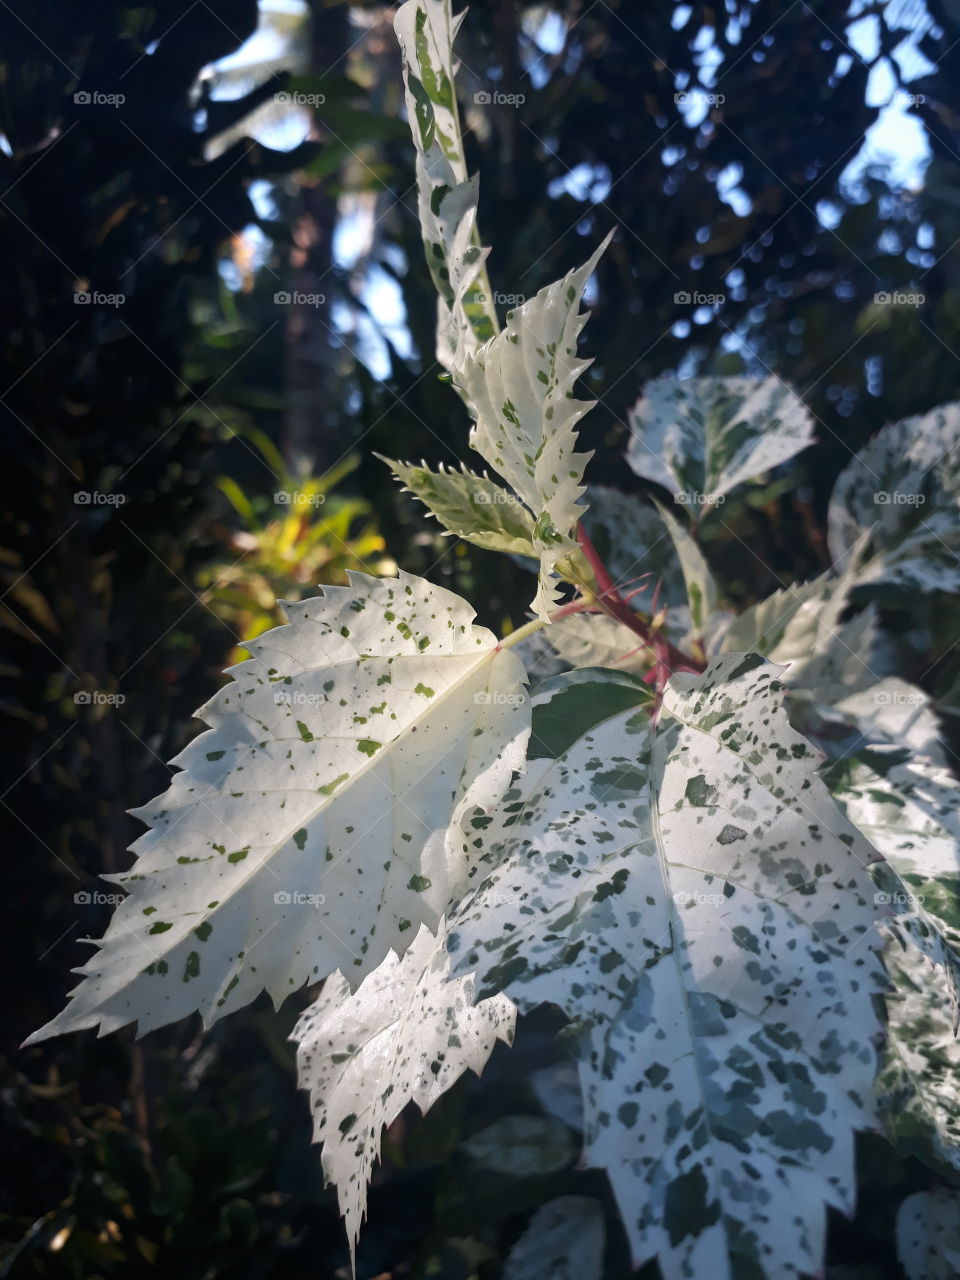 while leaf